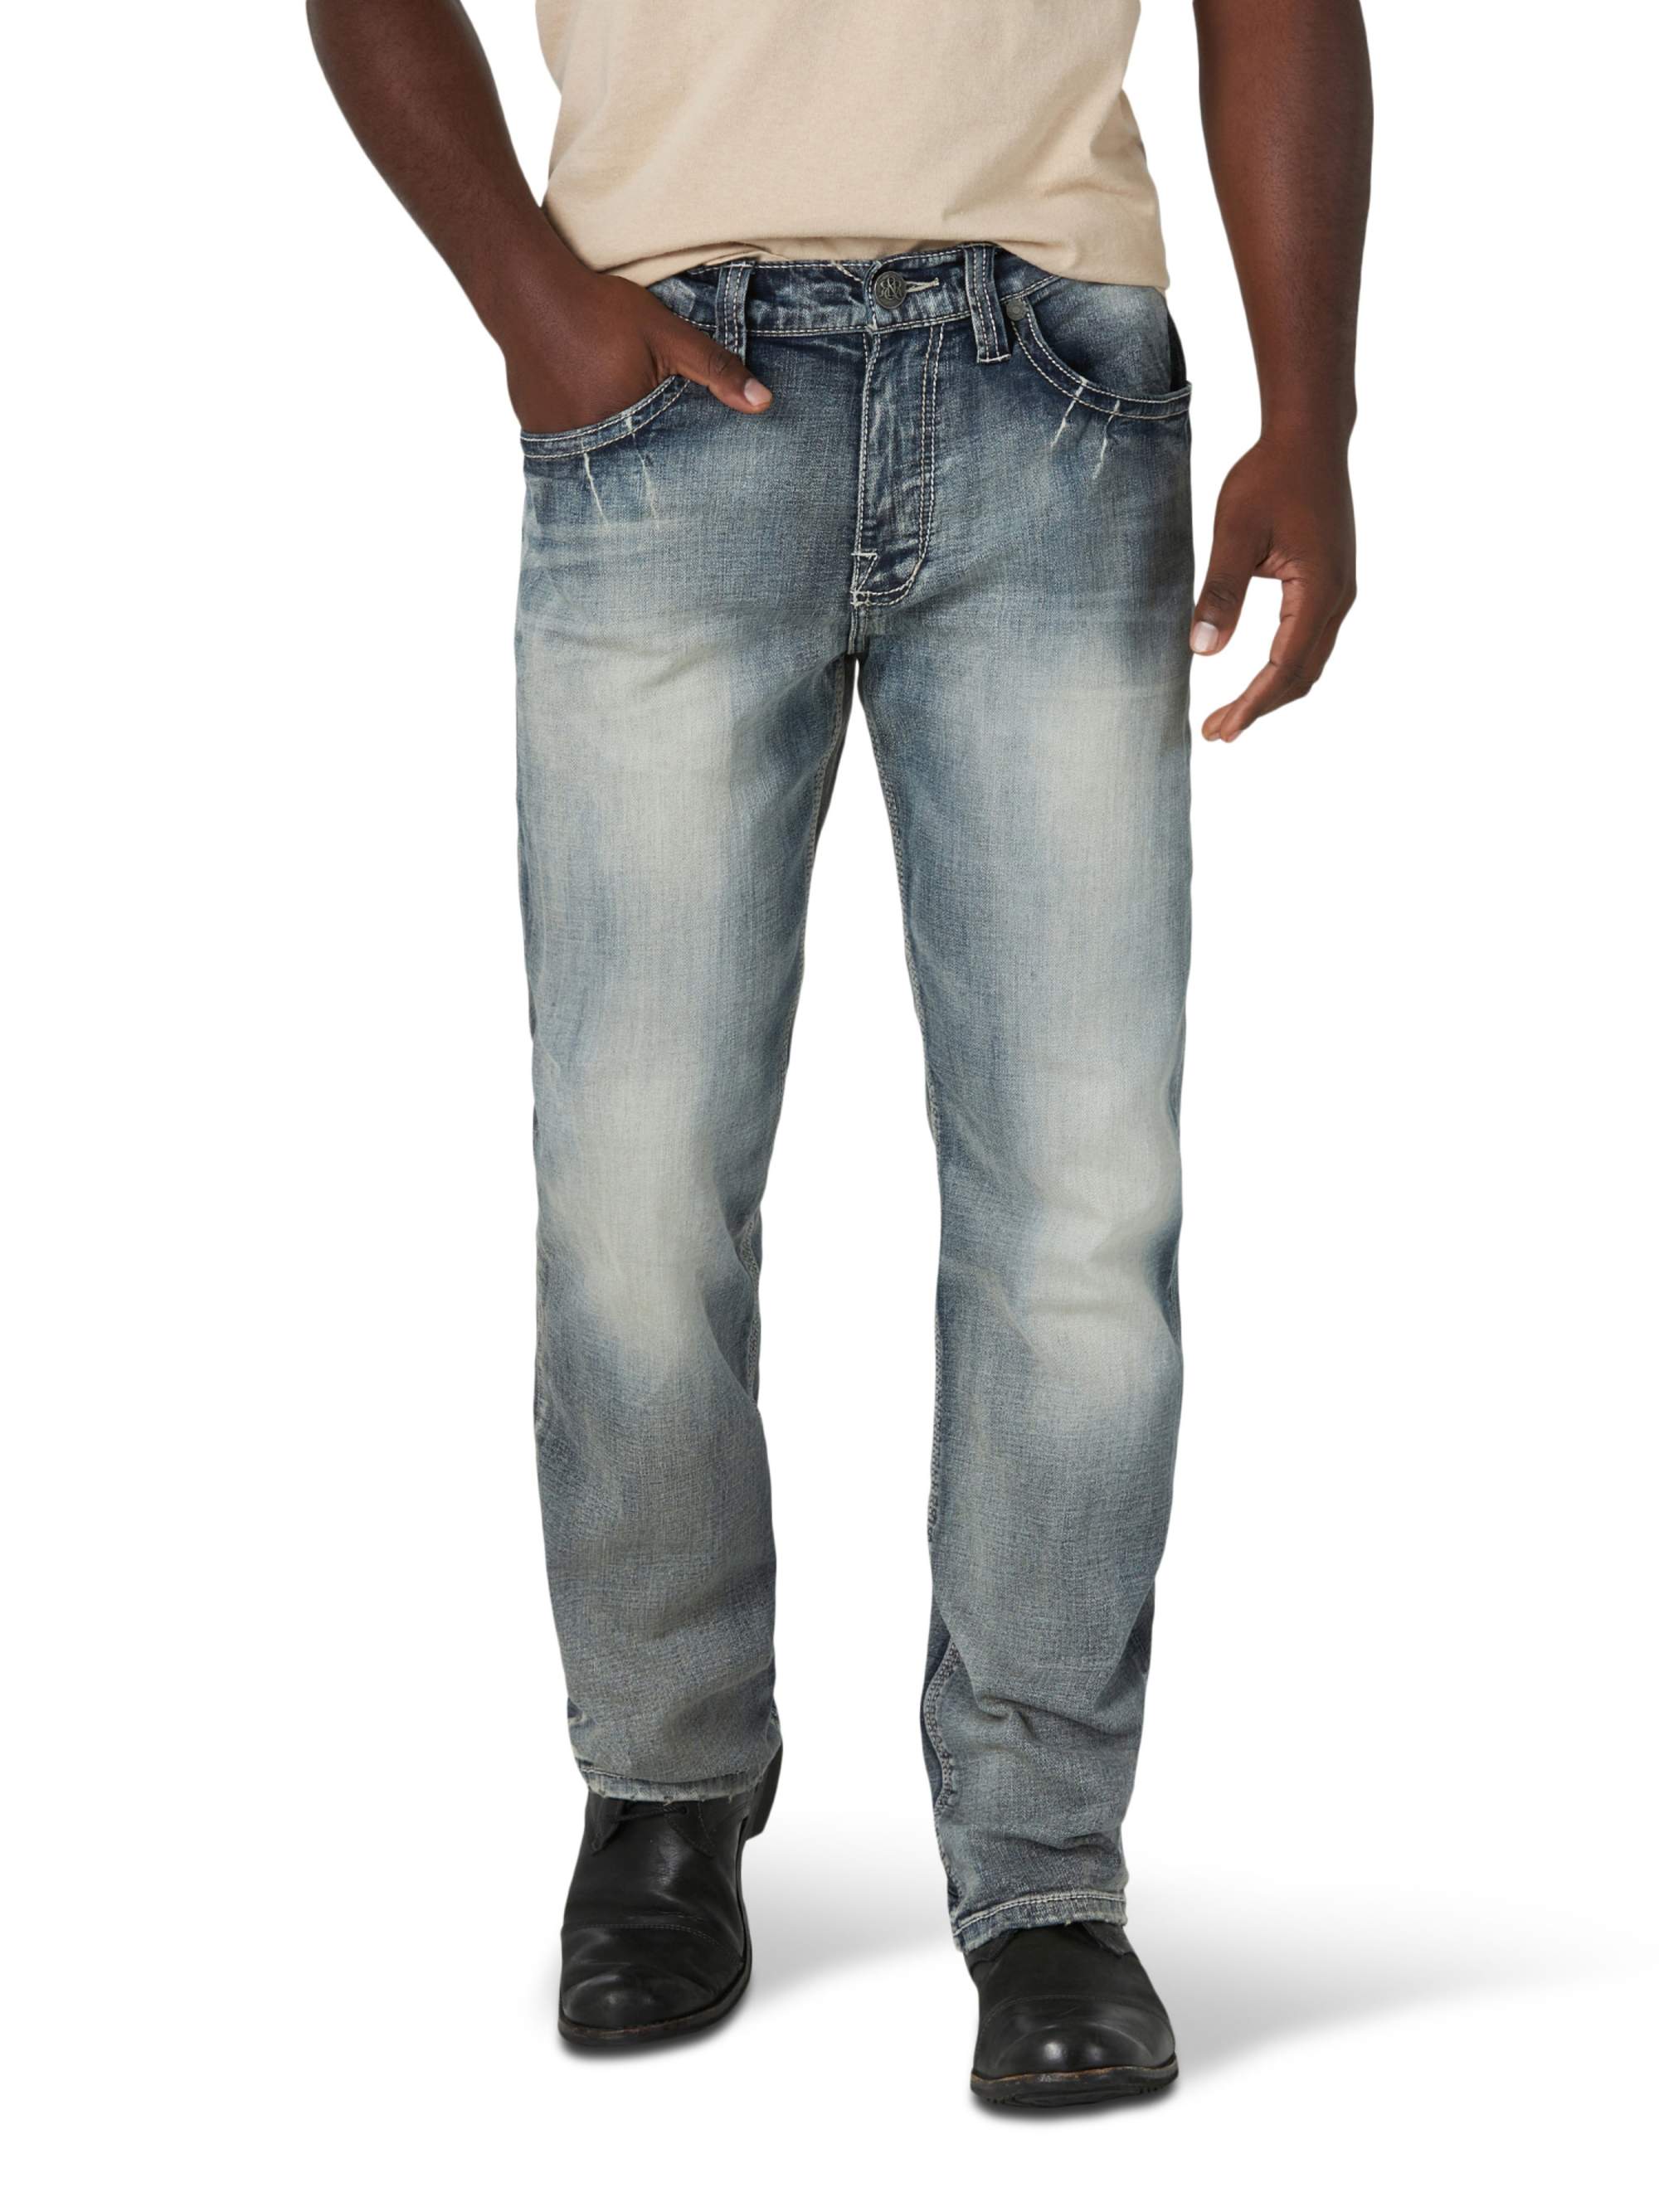 Rock & Republic Men's Straight Leg Jean with Ultra Comfort Denim - image 1 of 6